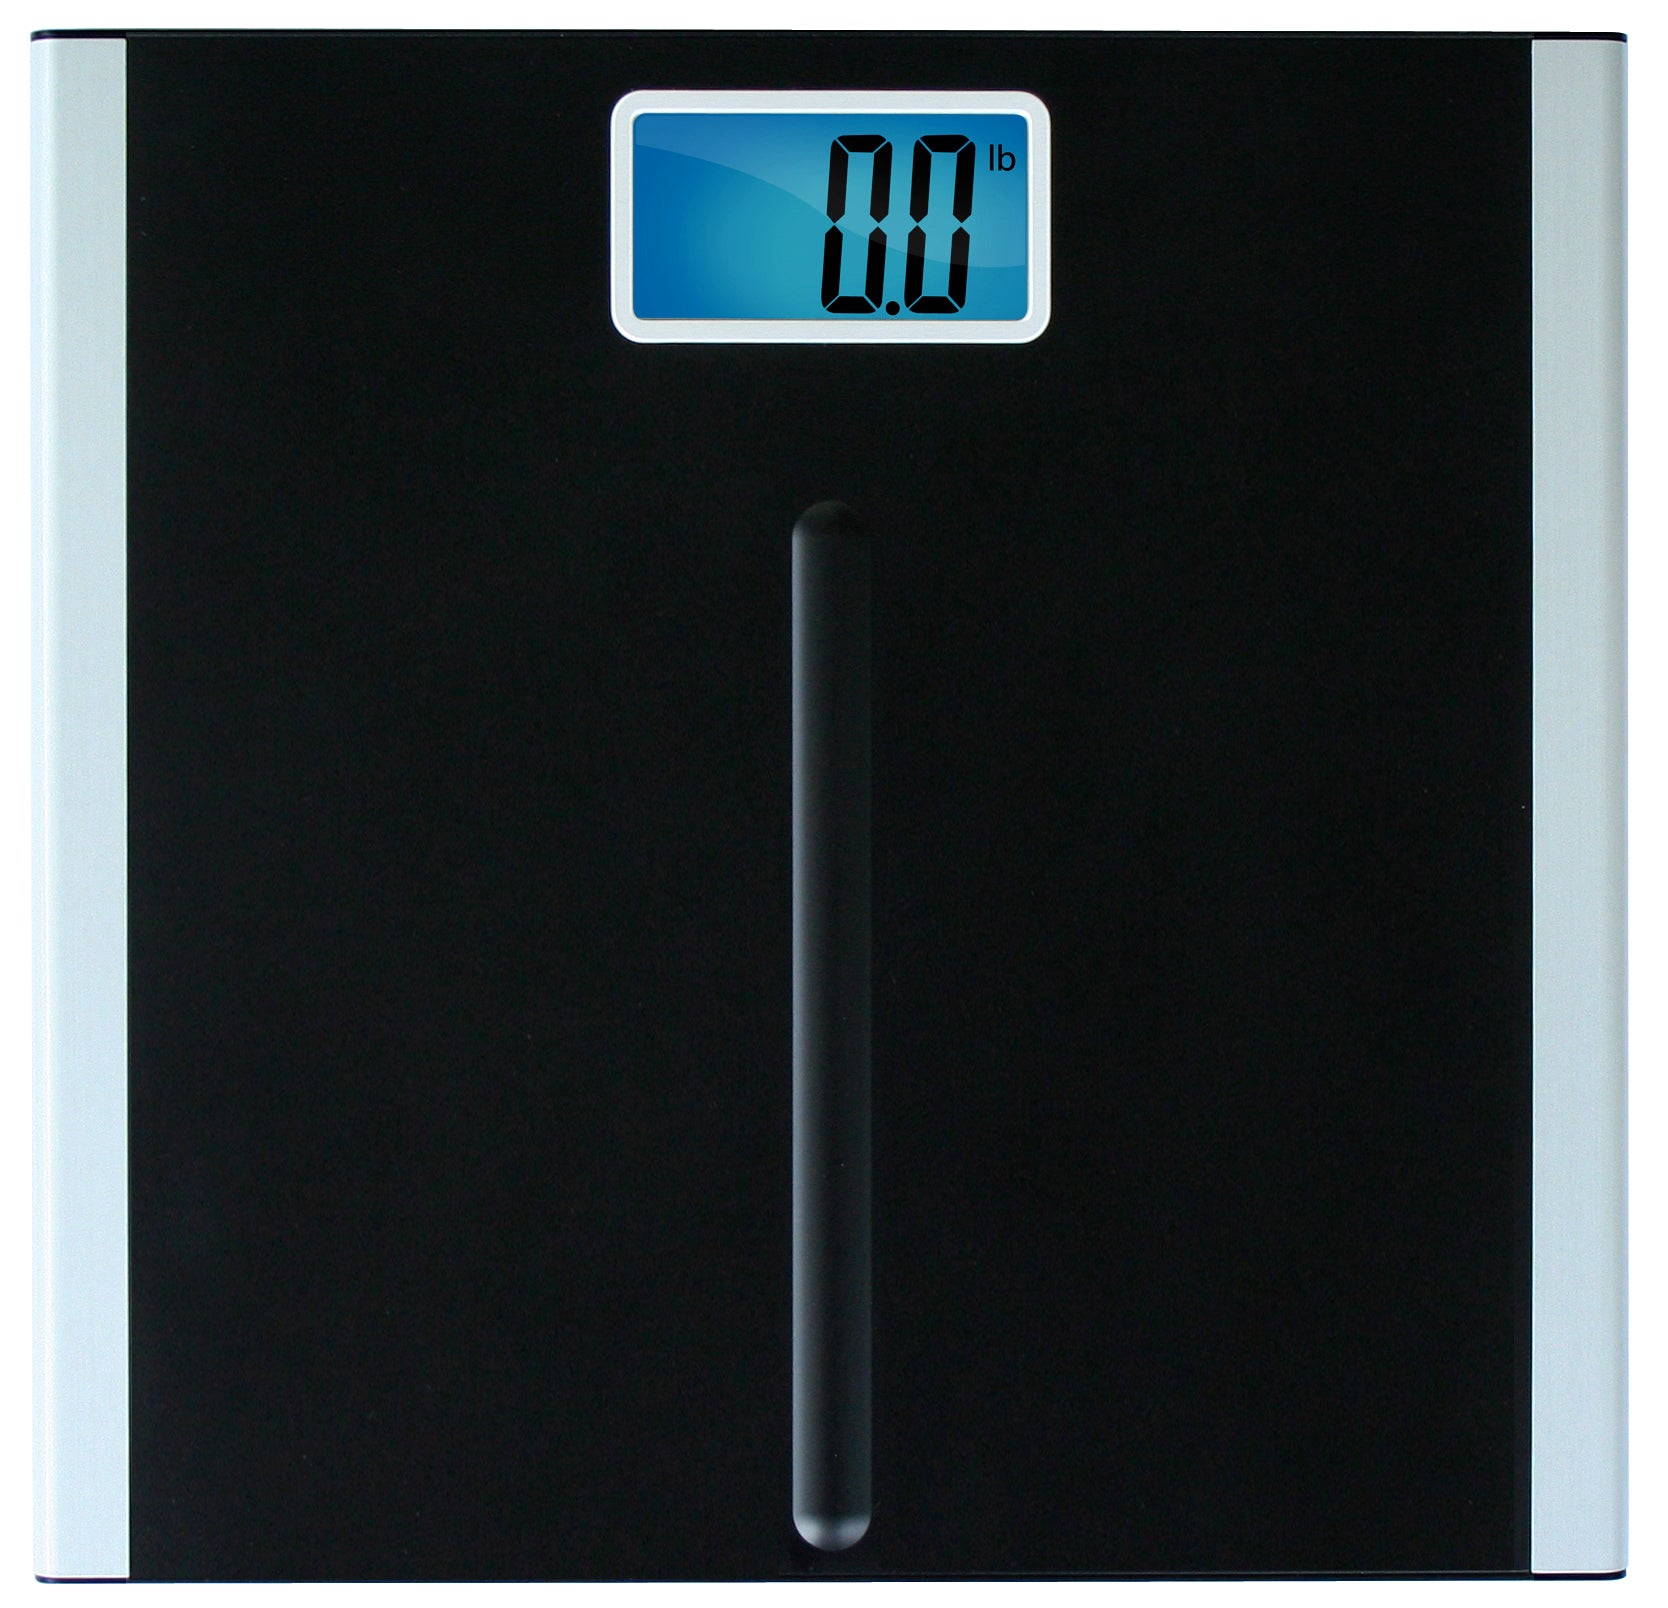 EatSmart Ultra Precision 330 Digital Bathroom Scale